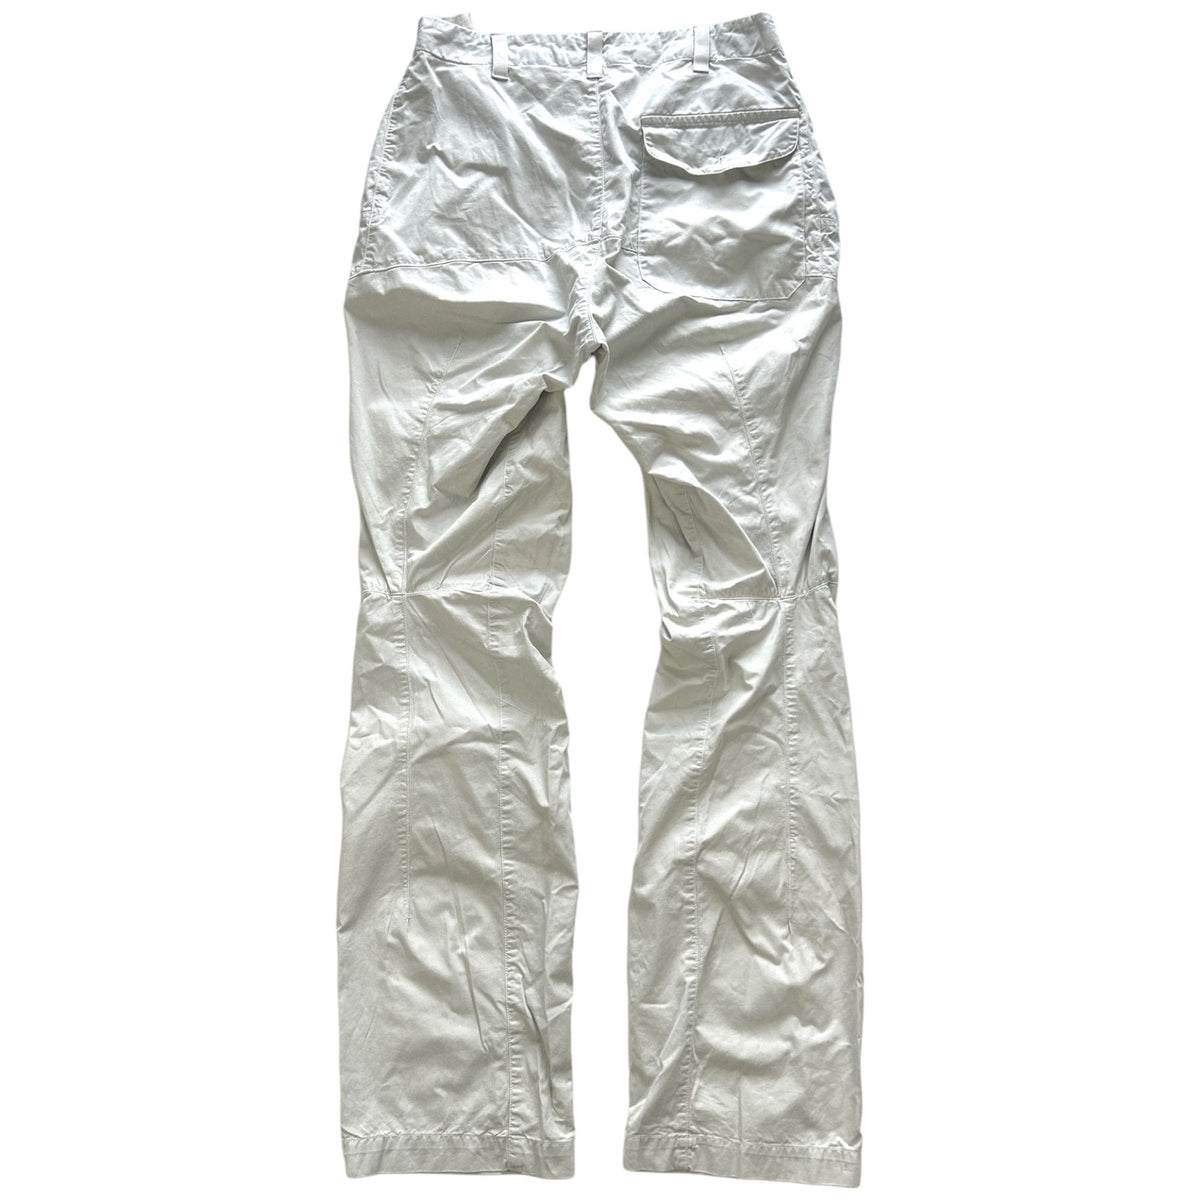 Vintage Stone Island Jet Pants Trousers Size W29